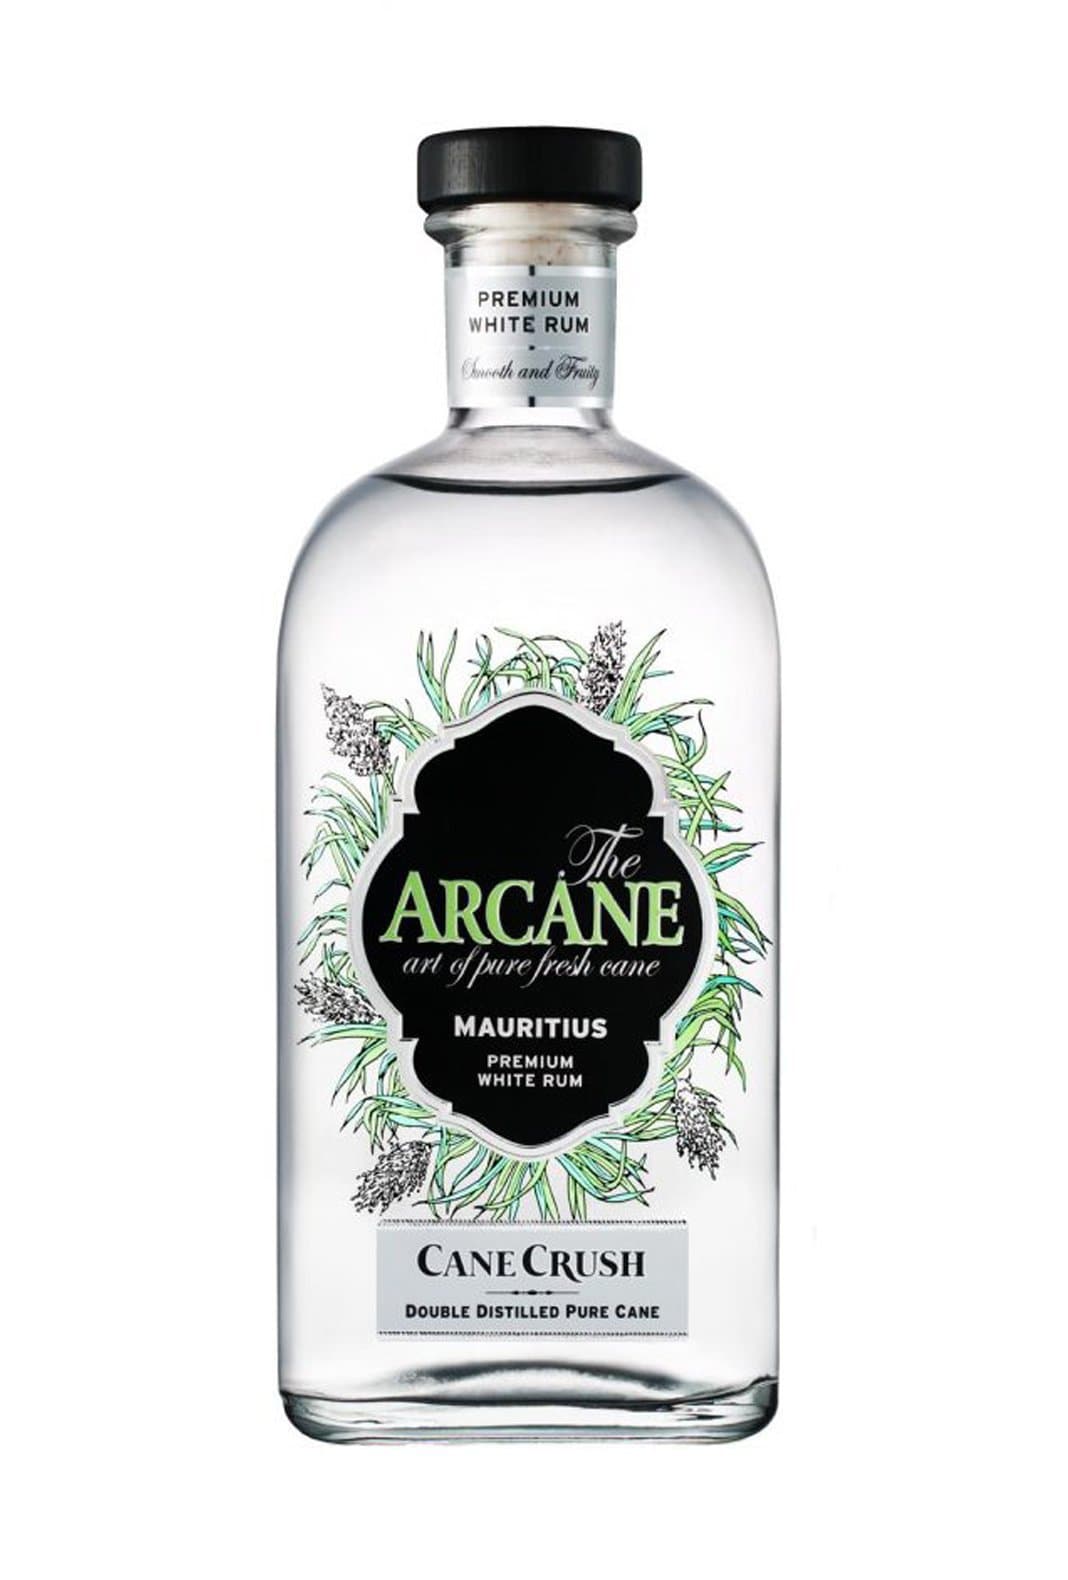 Arcane White Rum 'Cane Crush' 43.8% 700ml | Rum | Shop online at Spirits of France